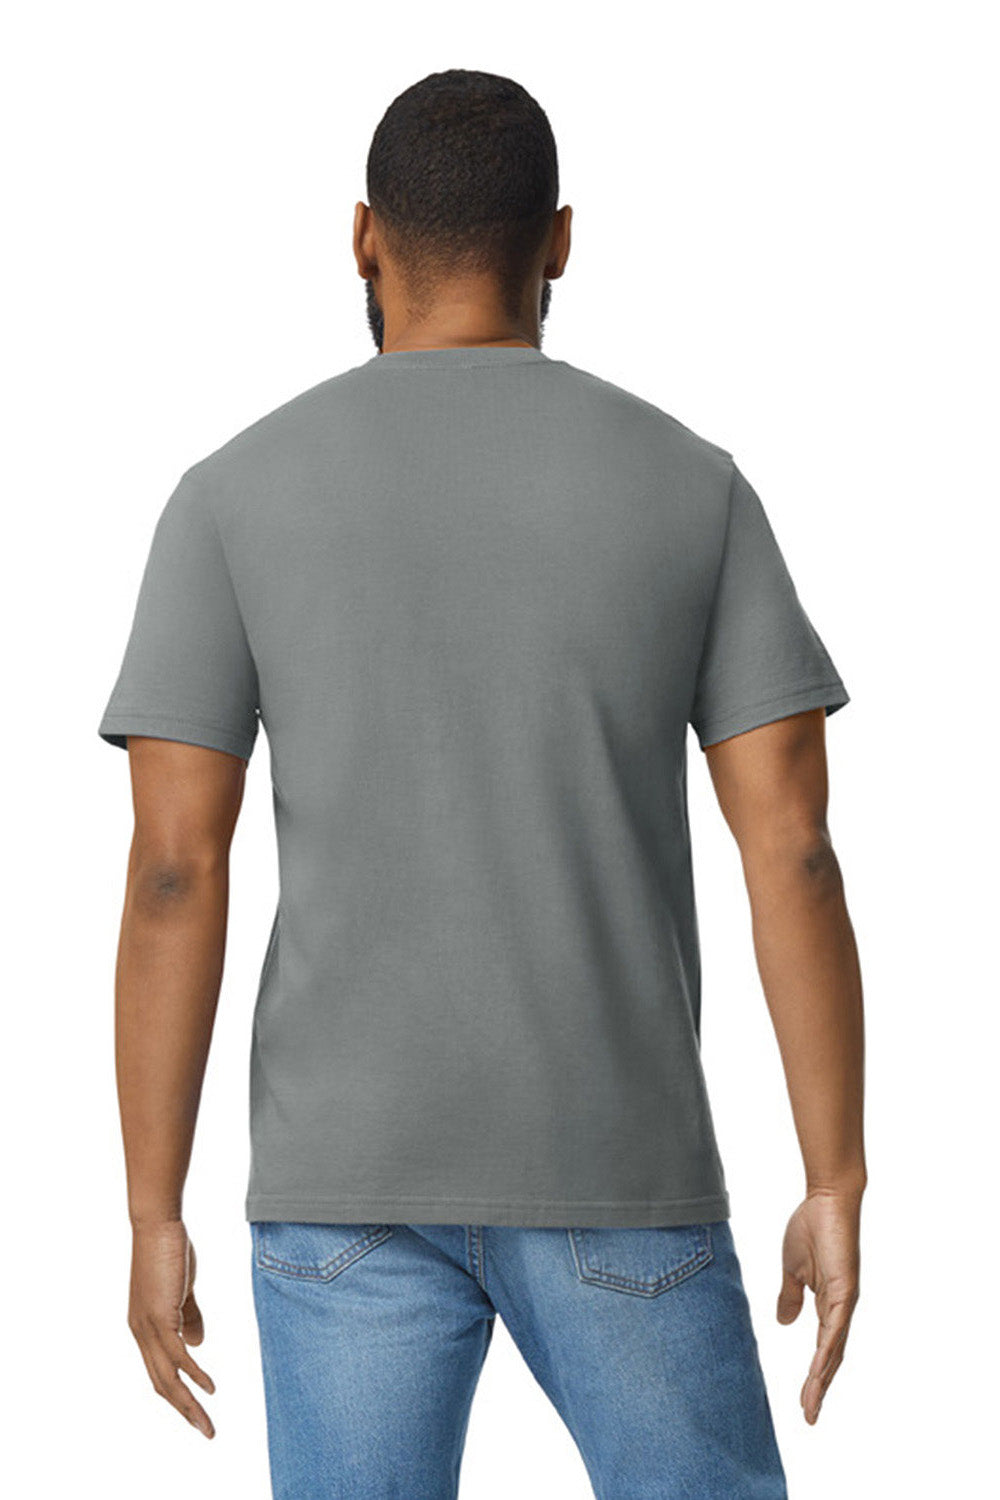 Gildan G650 Mens Softstyle Short Sleeve Crewneck T-Shirt Charcoal Grey Back